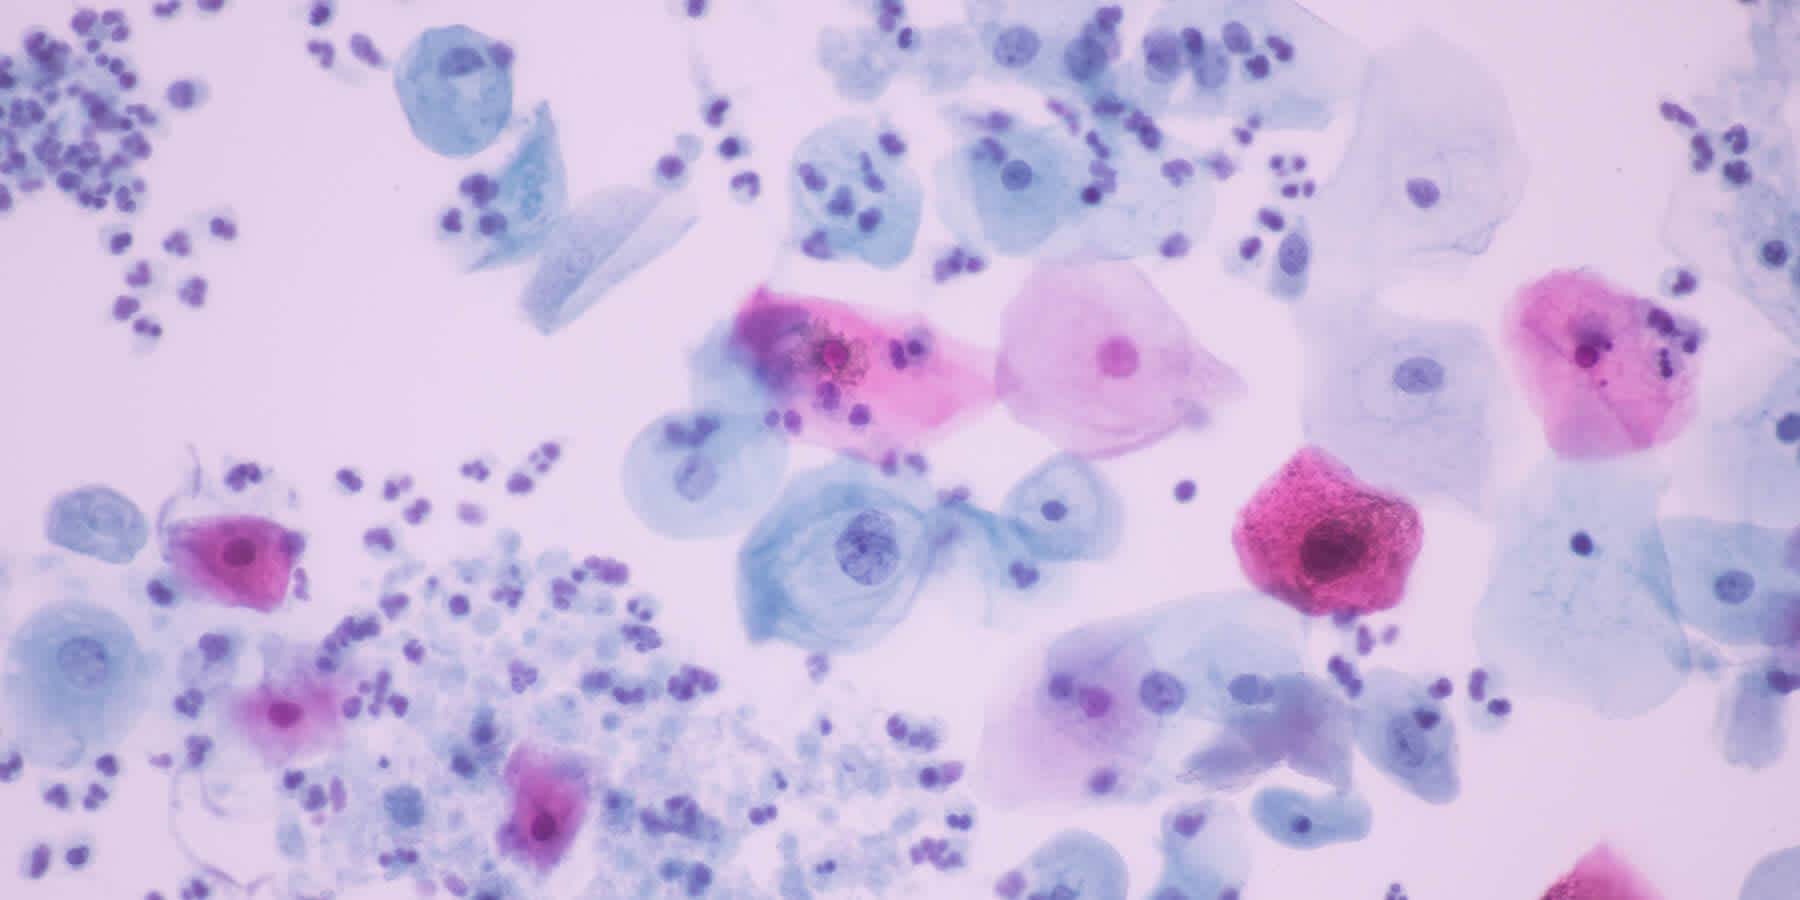 Microscopic image of cells to represent trichomoniasis vs. BV analysis